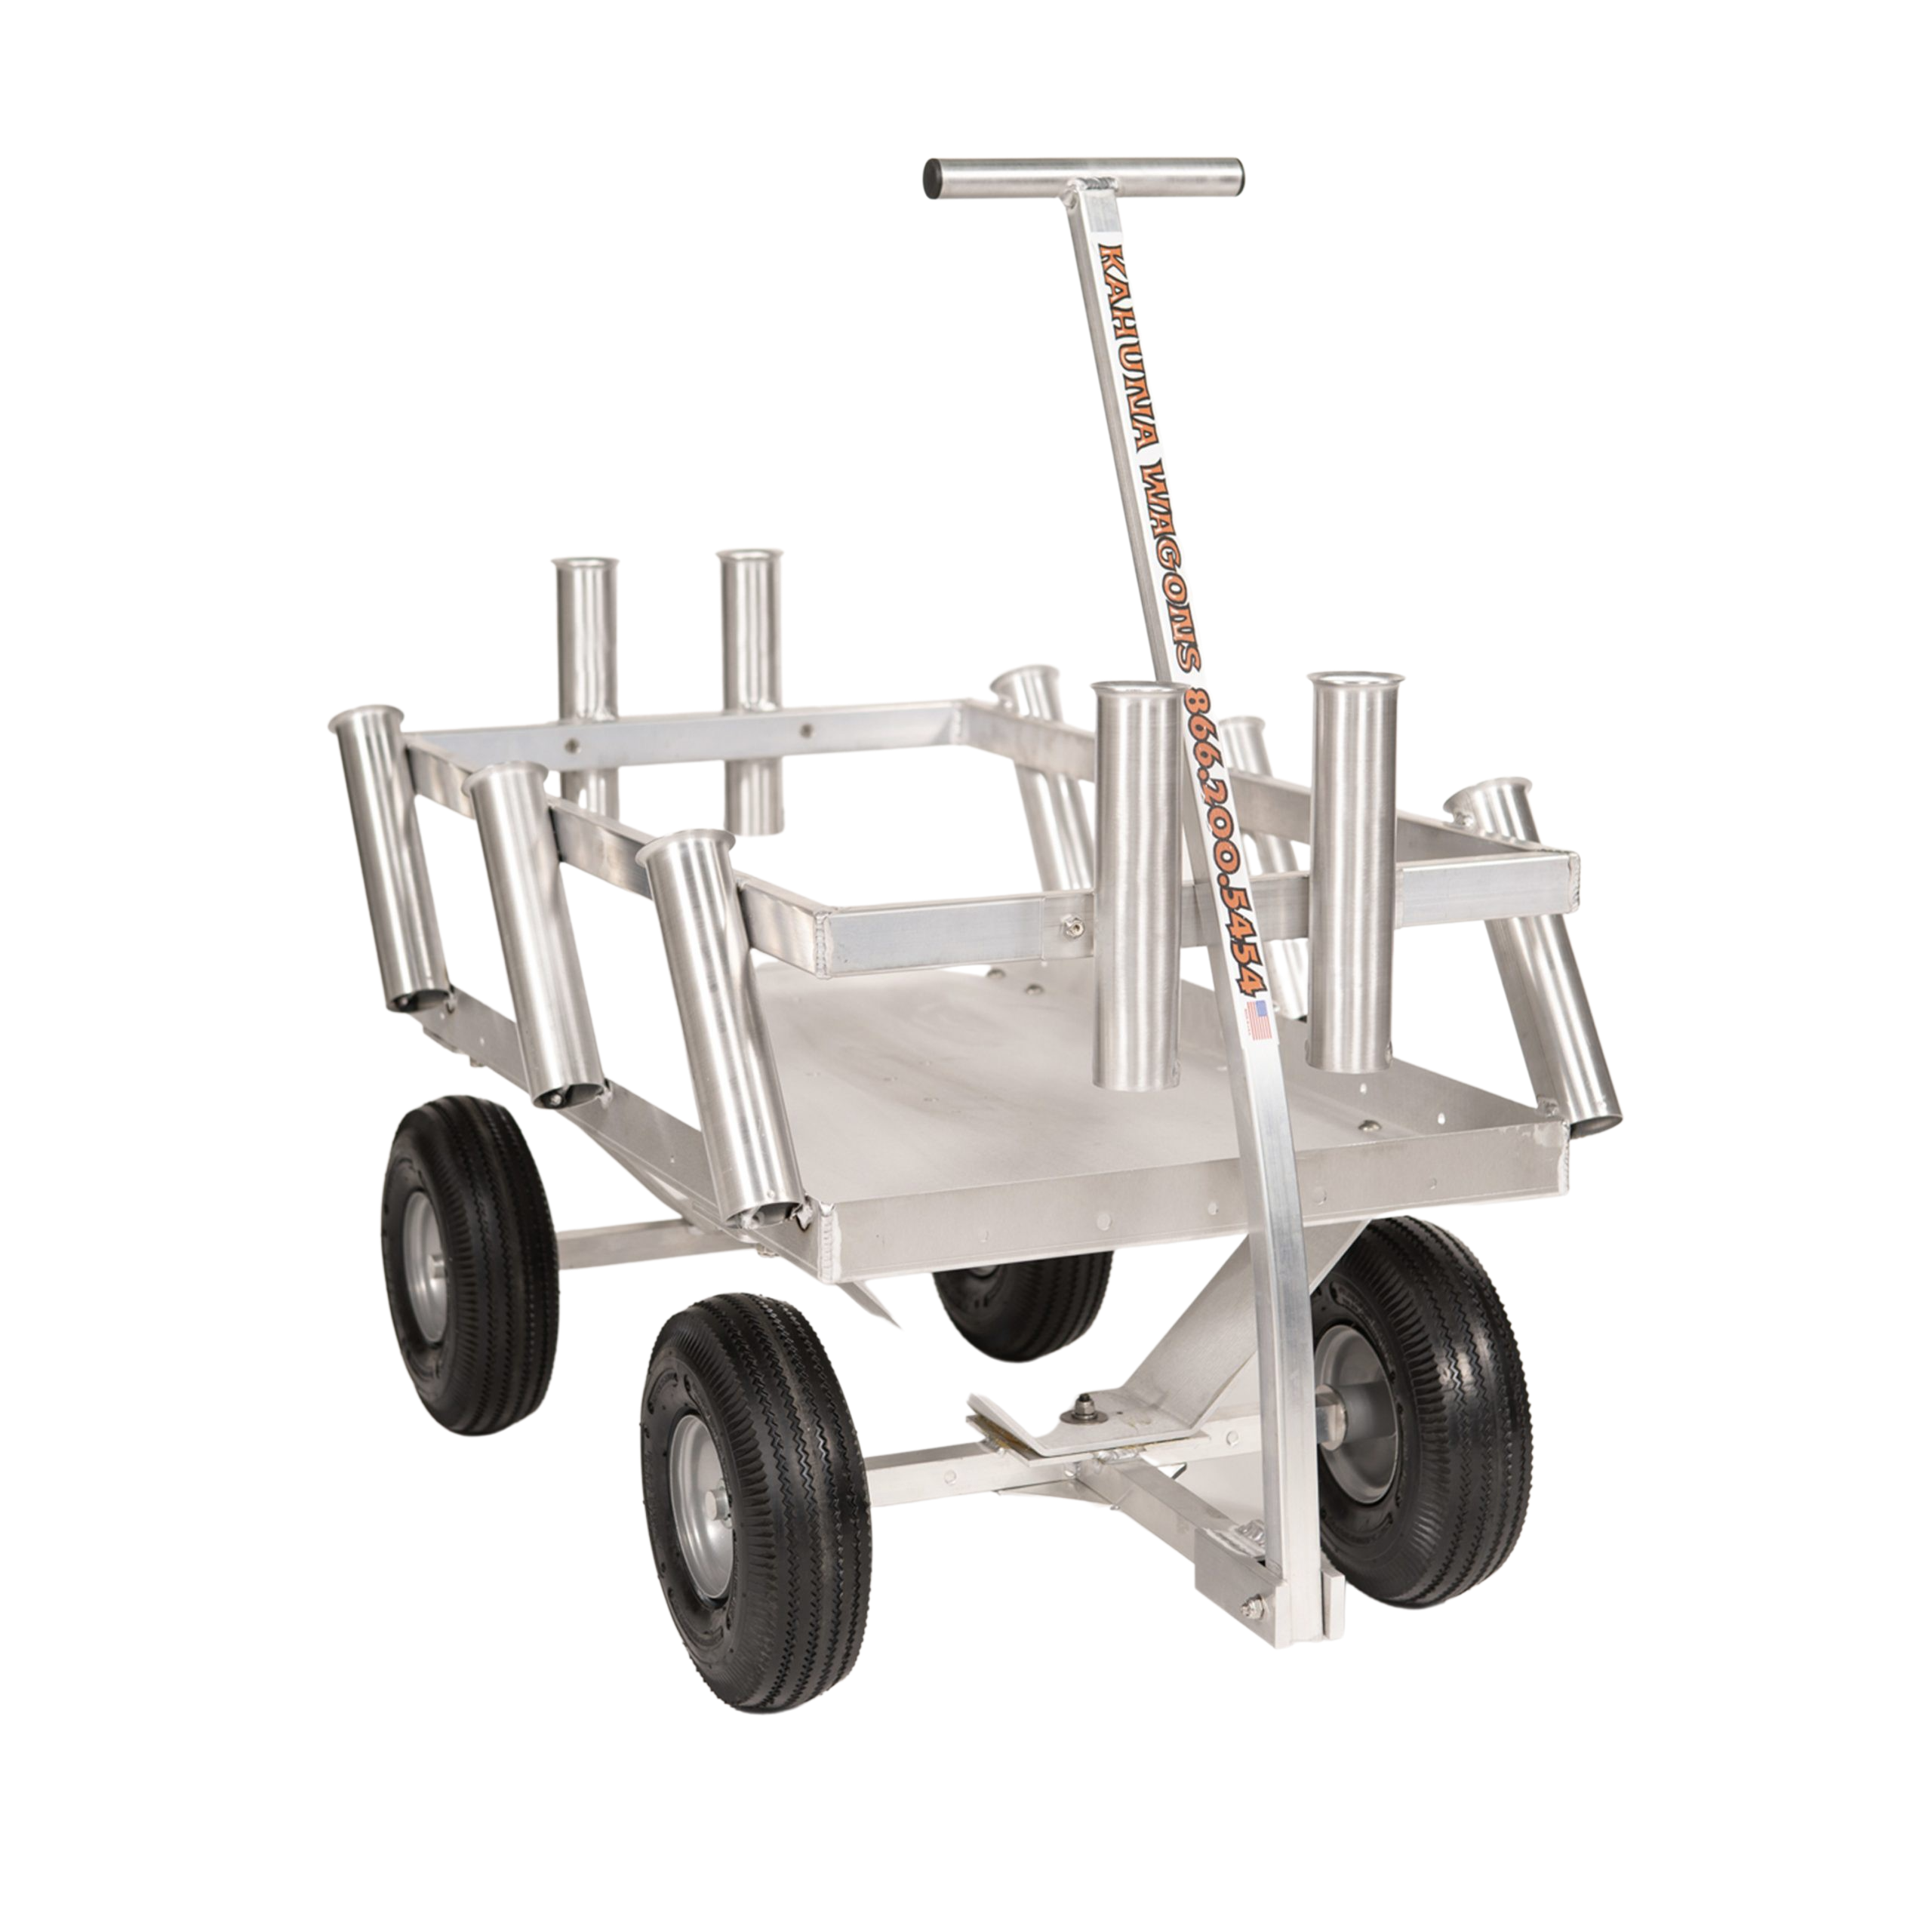 Aluminum Beach Fishing Cart Trolley with Wagon-Rod Holders & Wheel